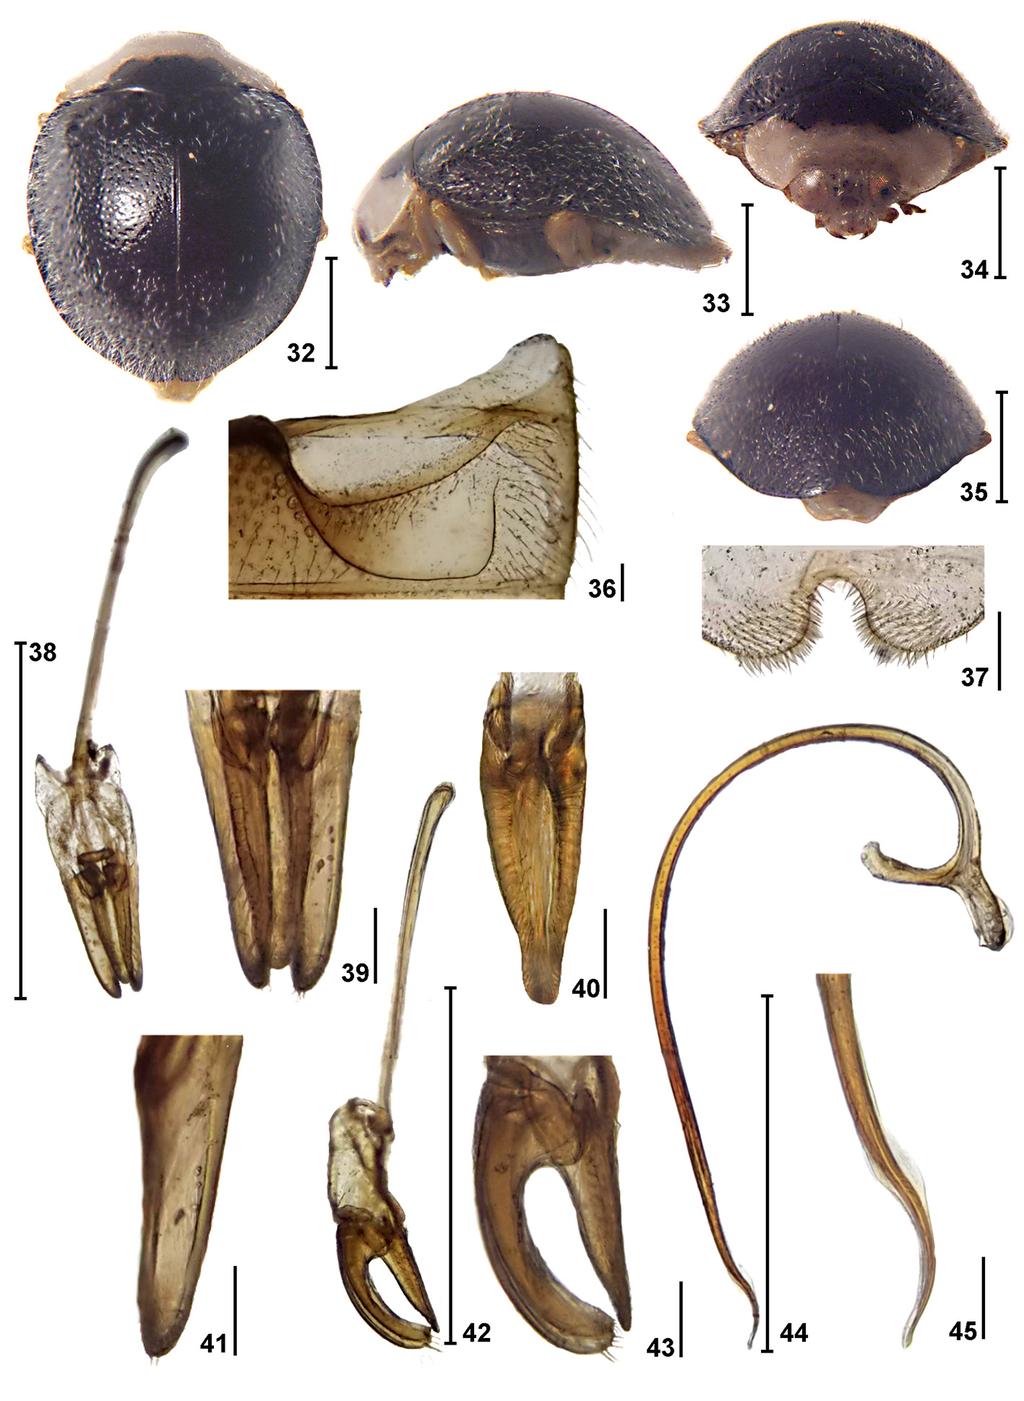 circumcincta Gordon, 1971; Z. emarginata Gordon, 1971; Z. linteolata Mulsant, 1850 and Z. purpurea Gordon, 1972. The new species differs from Z.